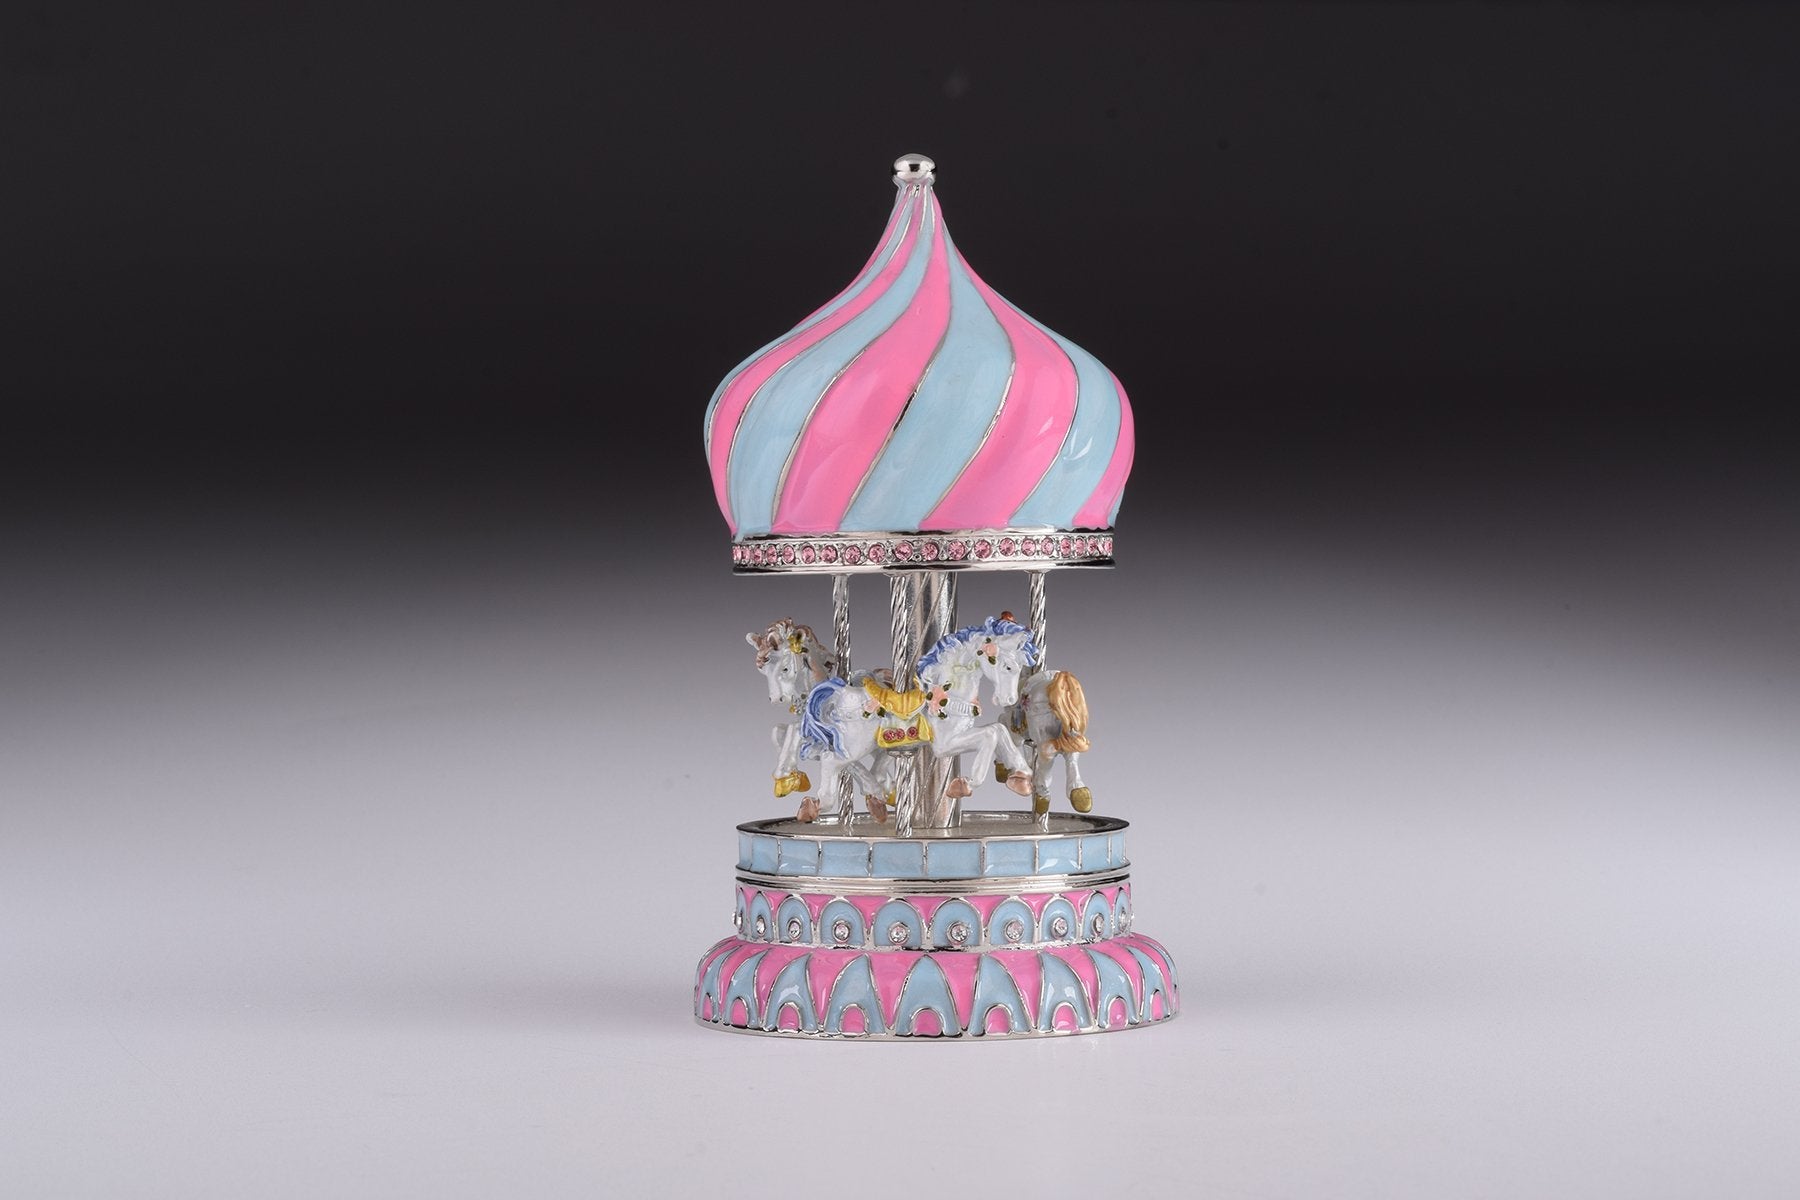 Pink Wind up Musical Carousel Carousel music box Keren Kopal